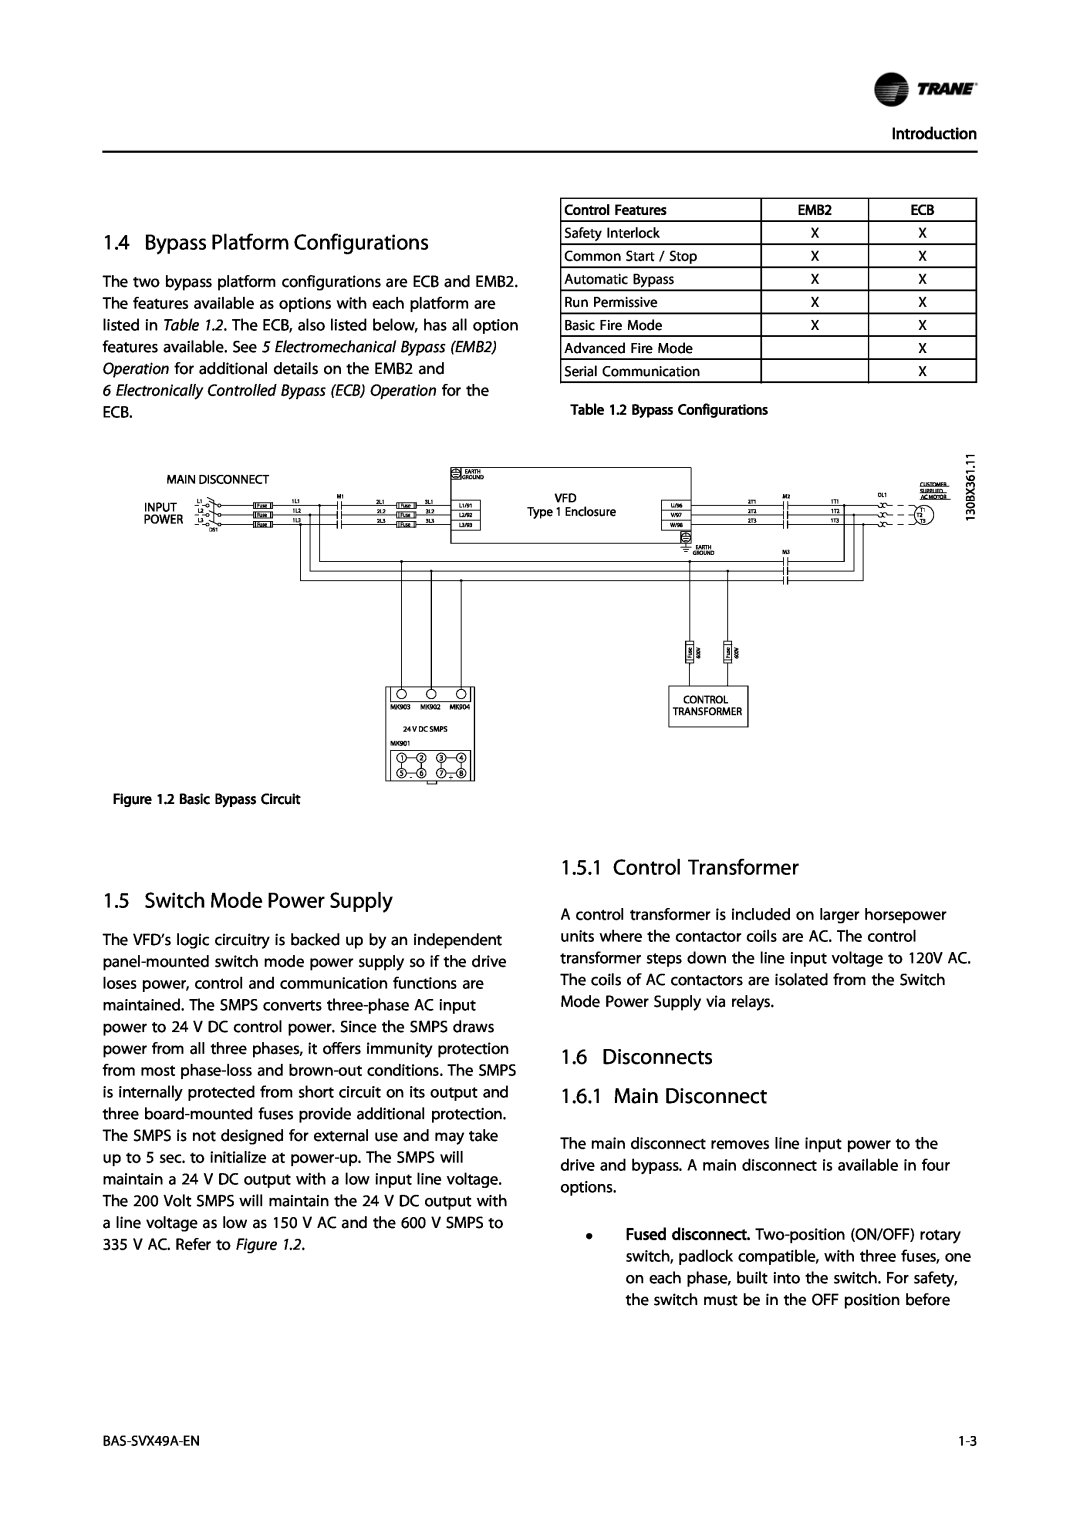 Trane Vertical Bypass/Non Bypass Panel Bypass Platform Configurations, Switch Mode Power Supply, Control Transformer 